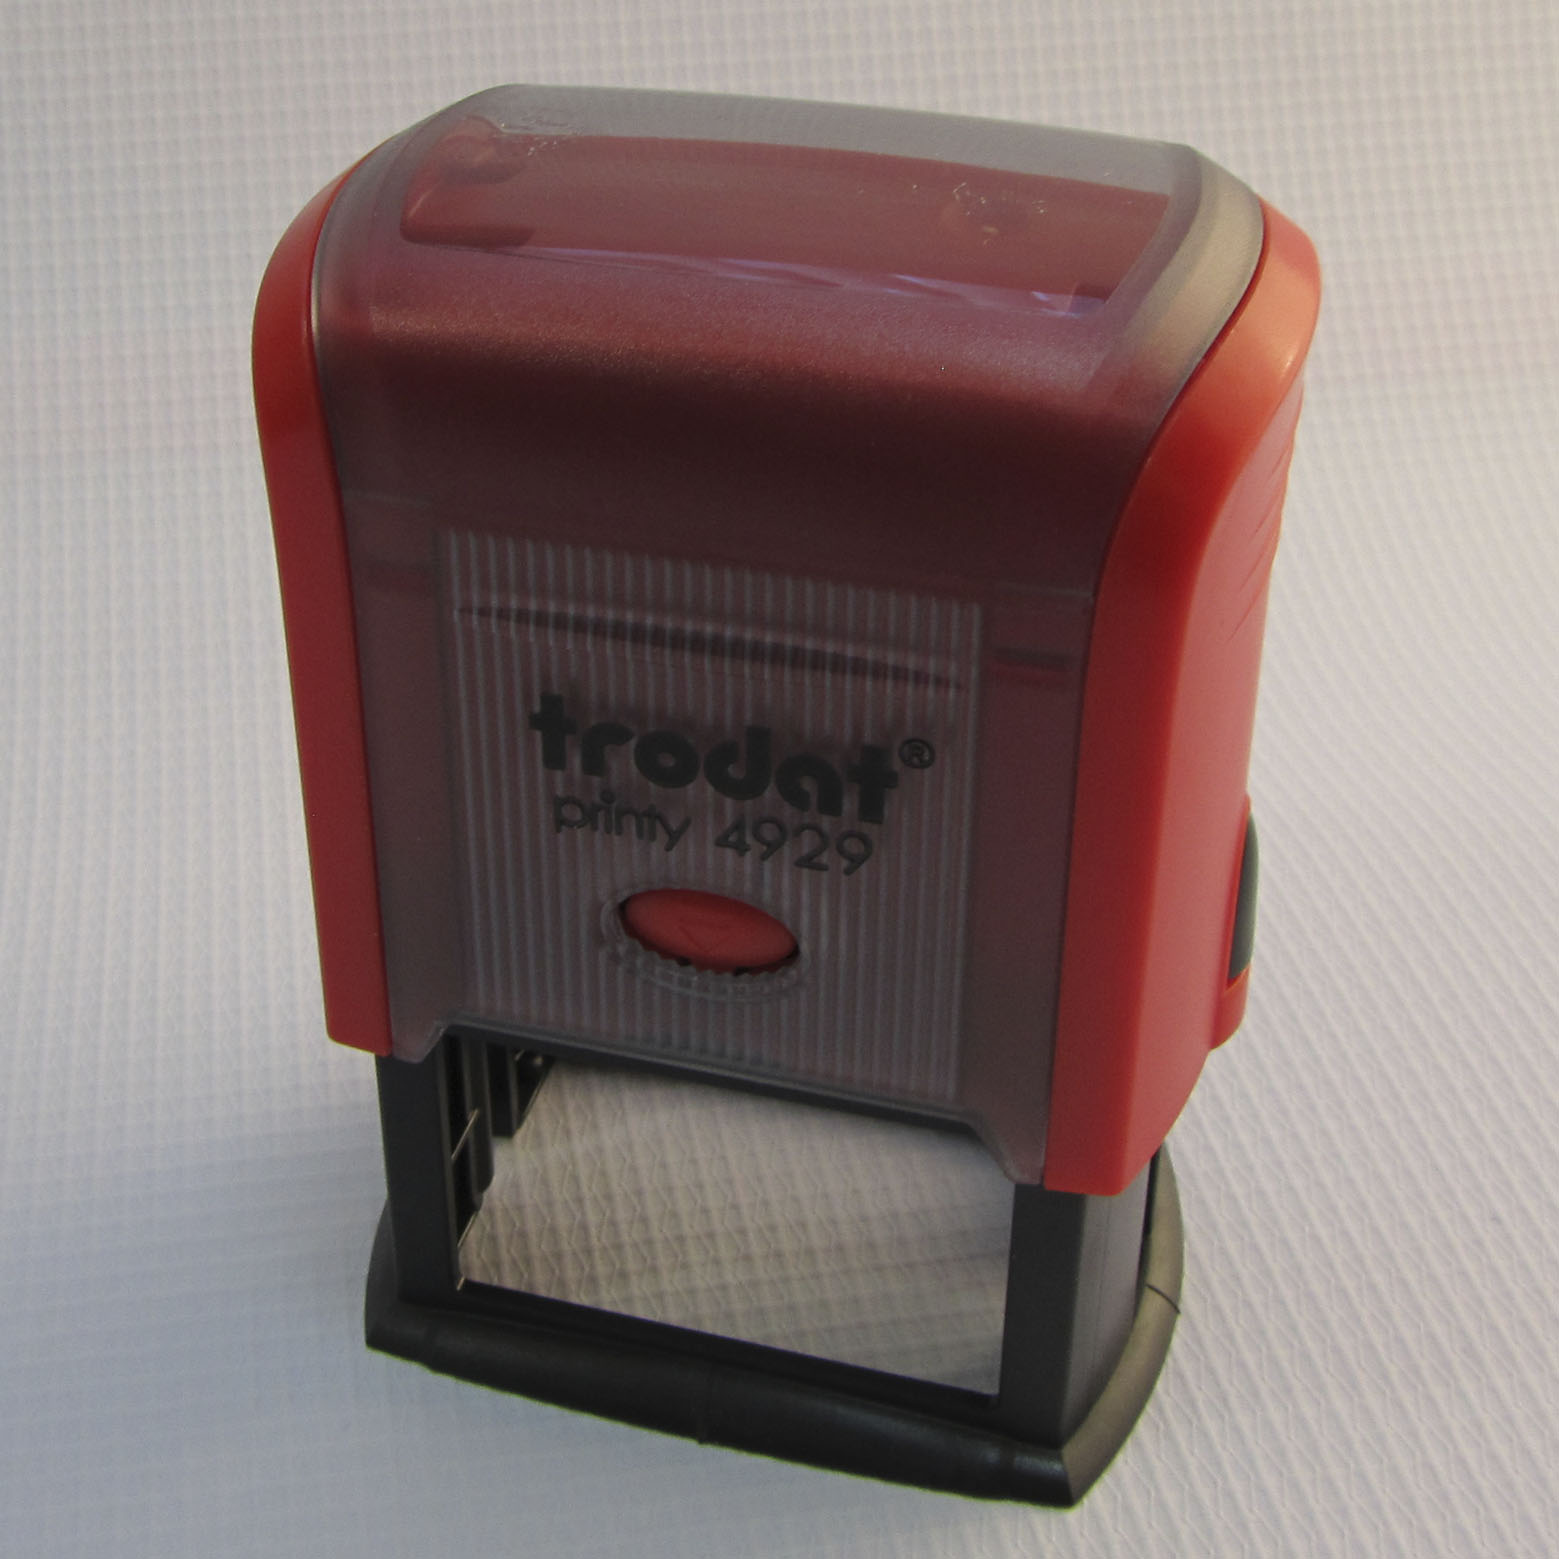 Автоматическая оснастка для штампа Trodat Printy 4929